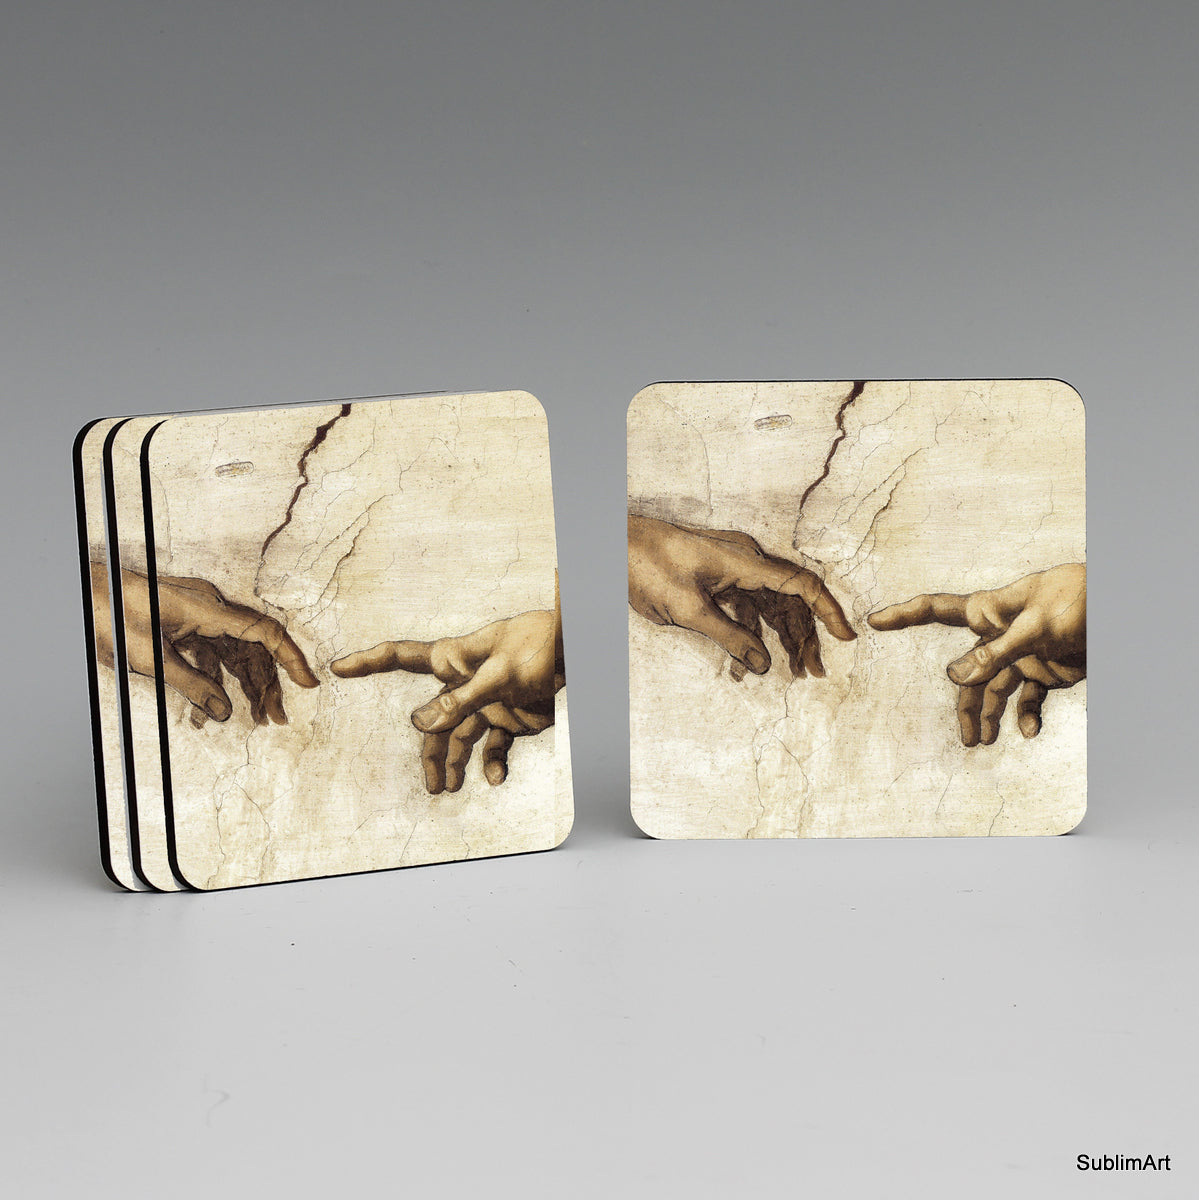 SUBLIMART: MDF Hardboard Set of 4 Coasters - Design: Affresco - The Creation of Adam By Michelangelo